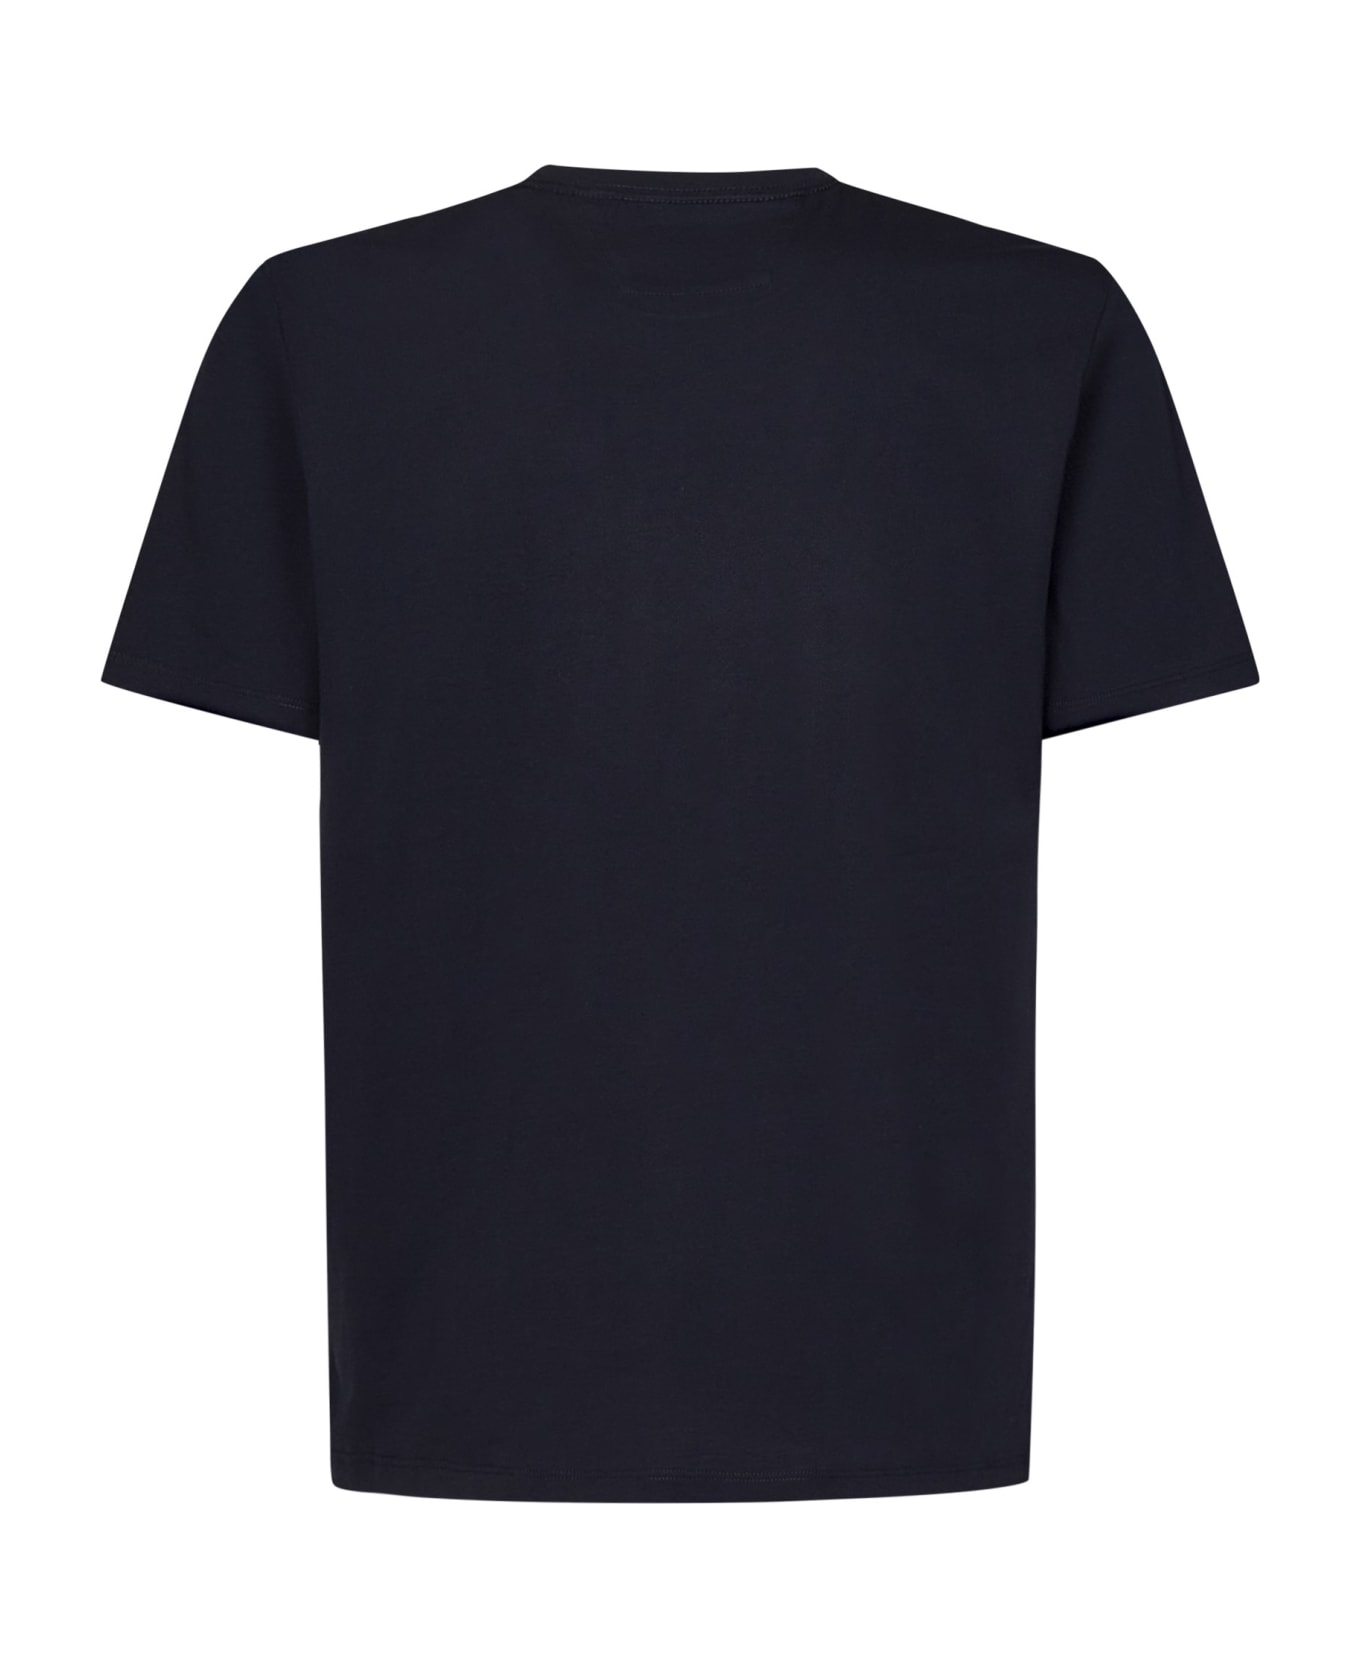 C.P. Company T-shirt - Total Eclipse